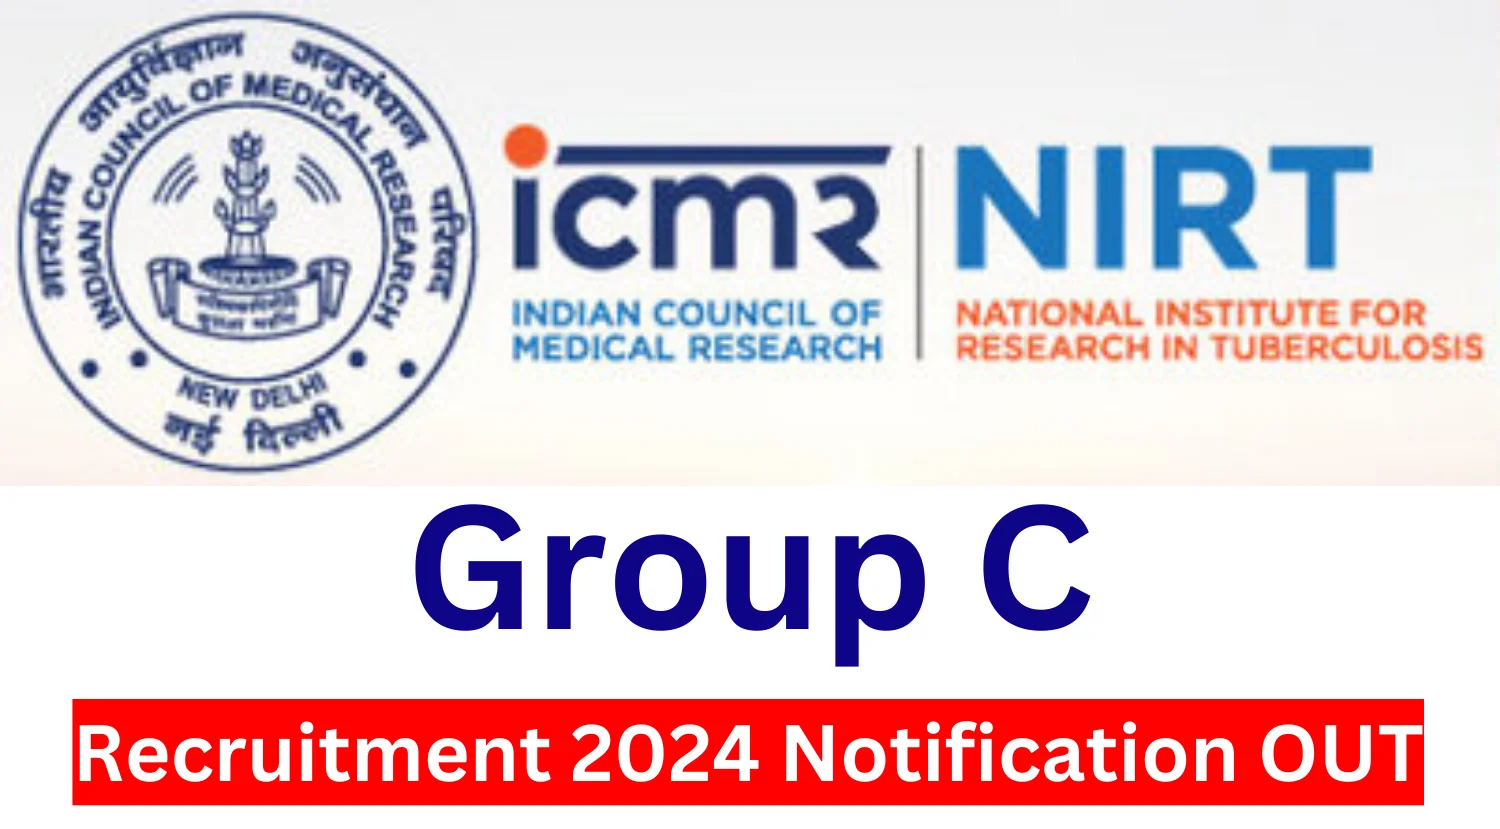 ICMR-NIRT Recruitment 2024 Notification OUT